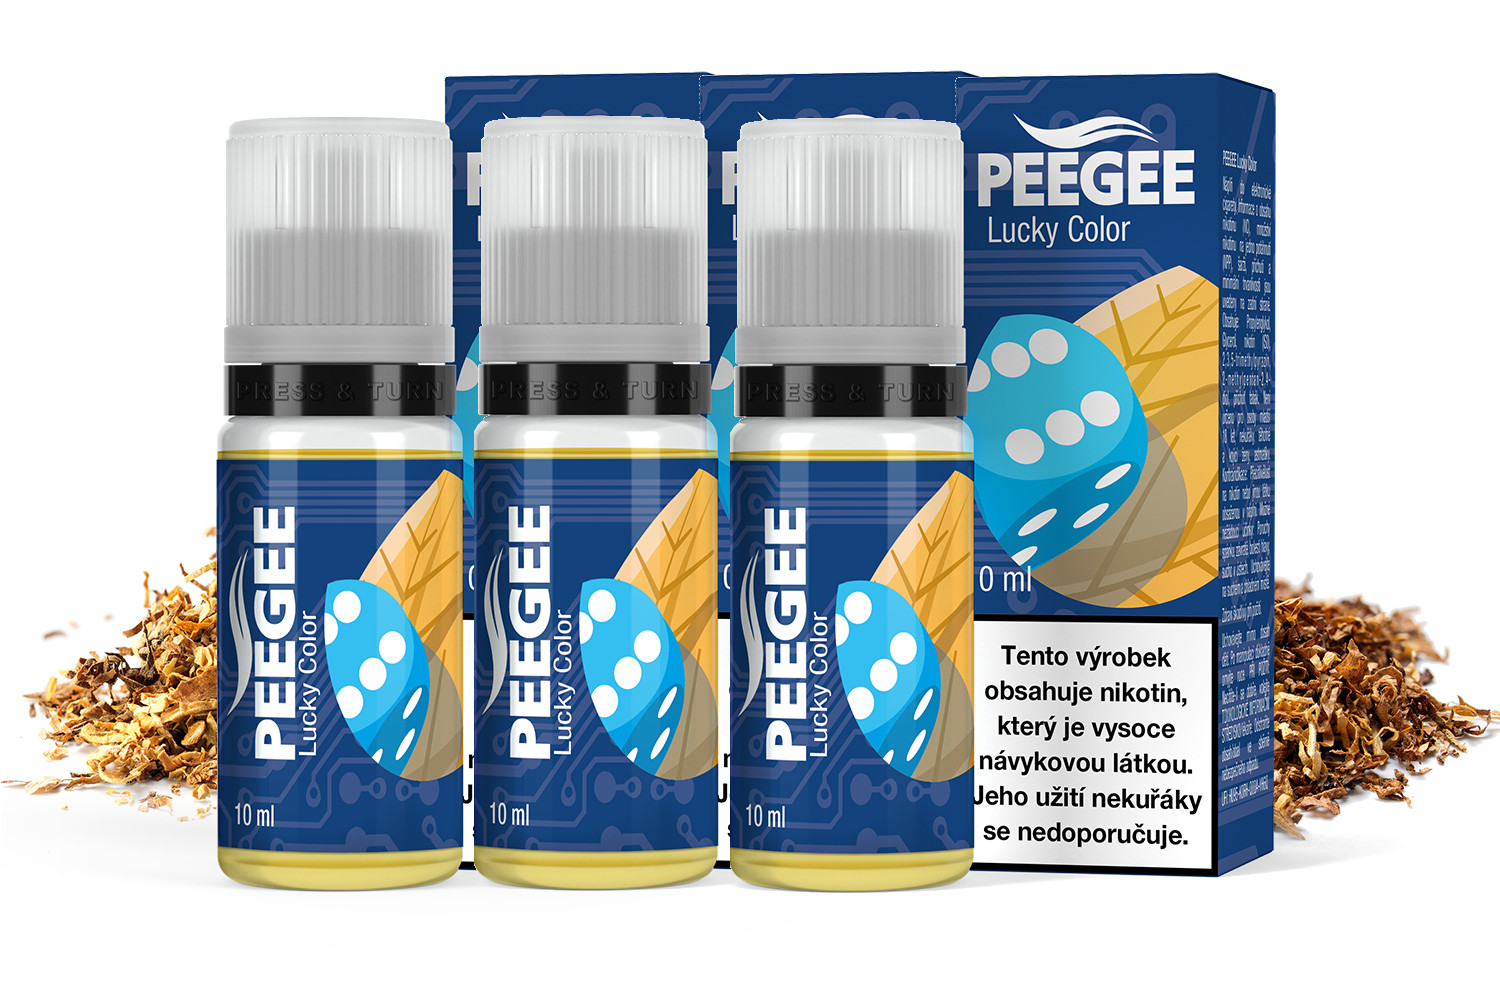 PEEGEE - Lucky Color 3x10ml Obsah nikotinu: 6mg